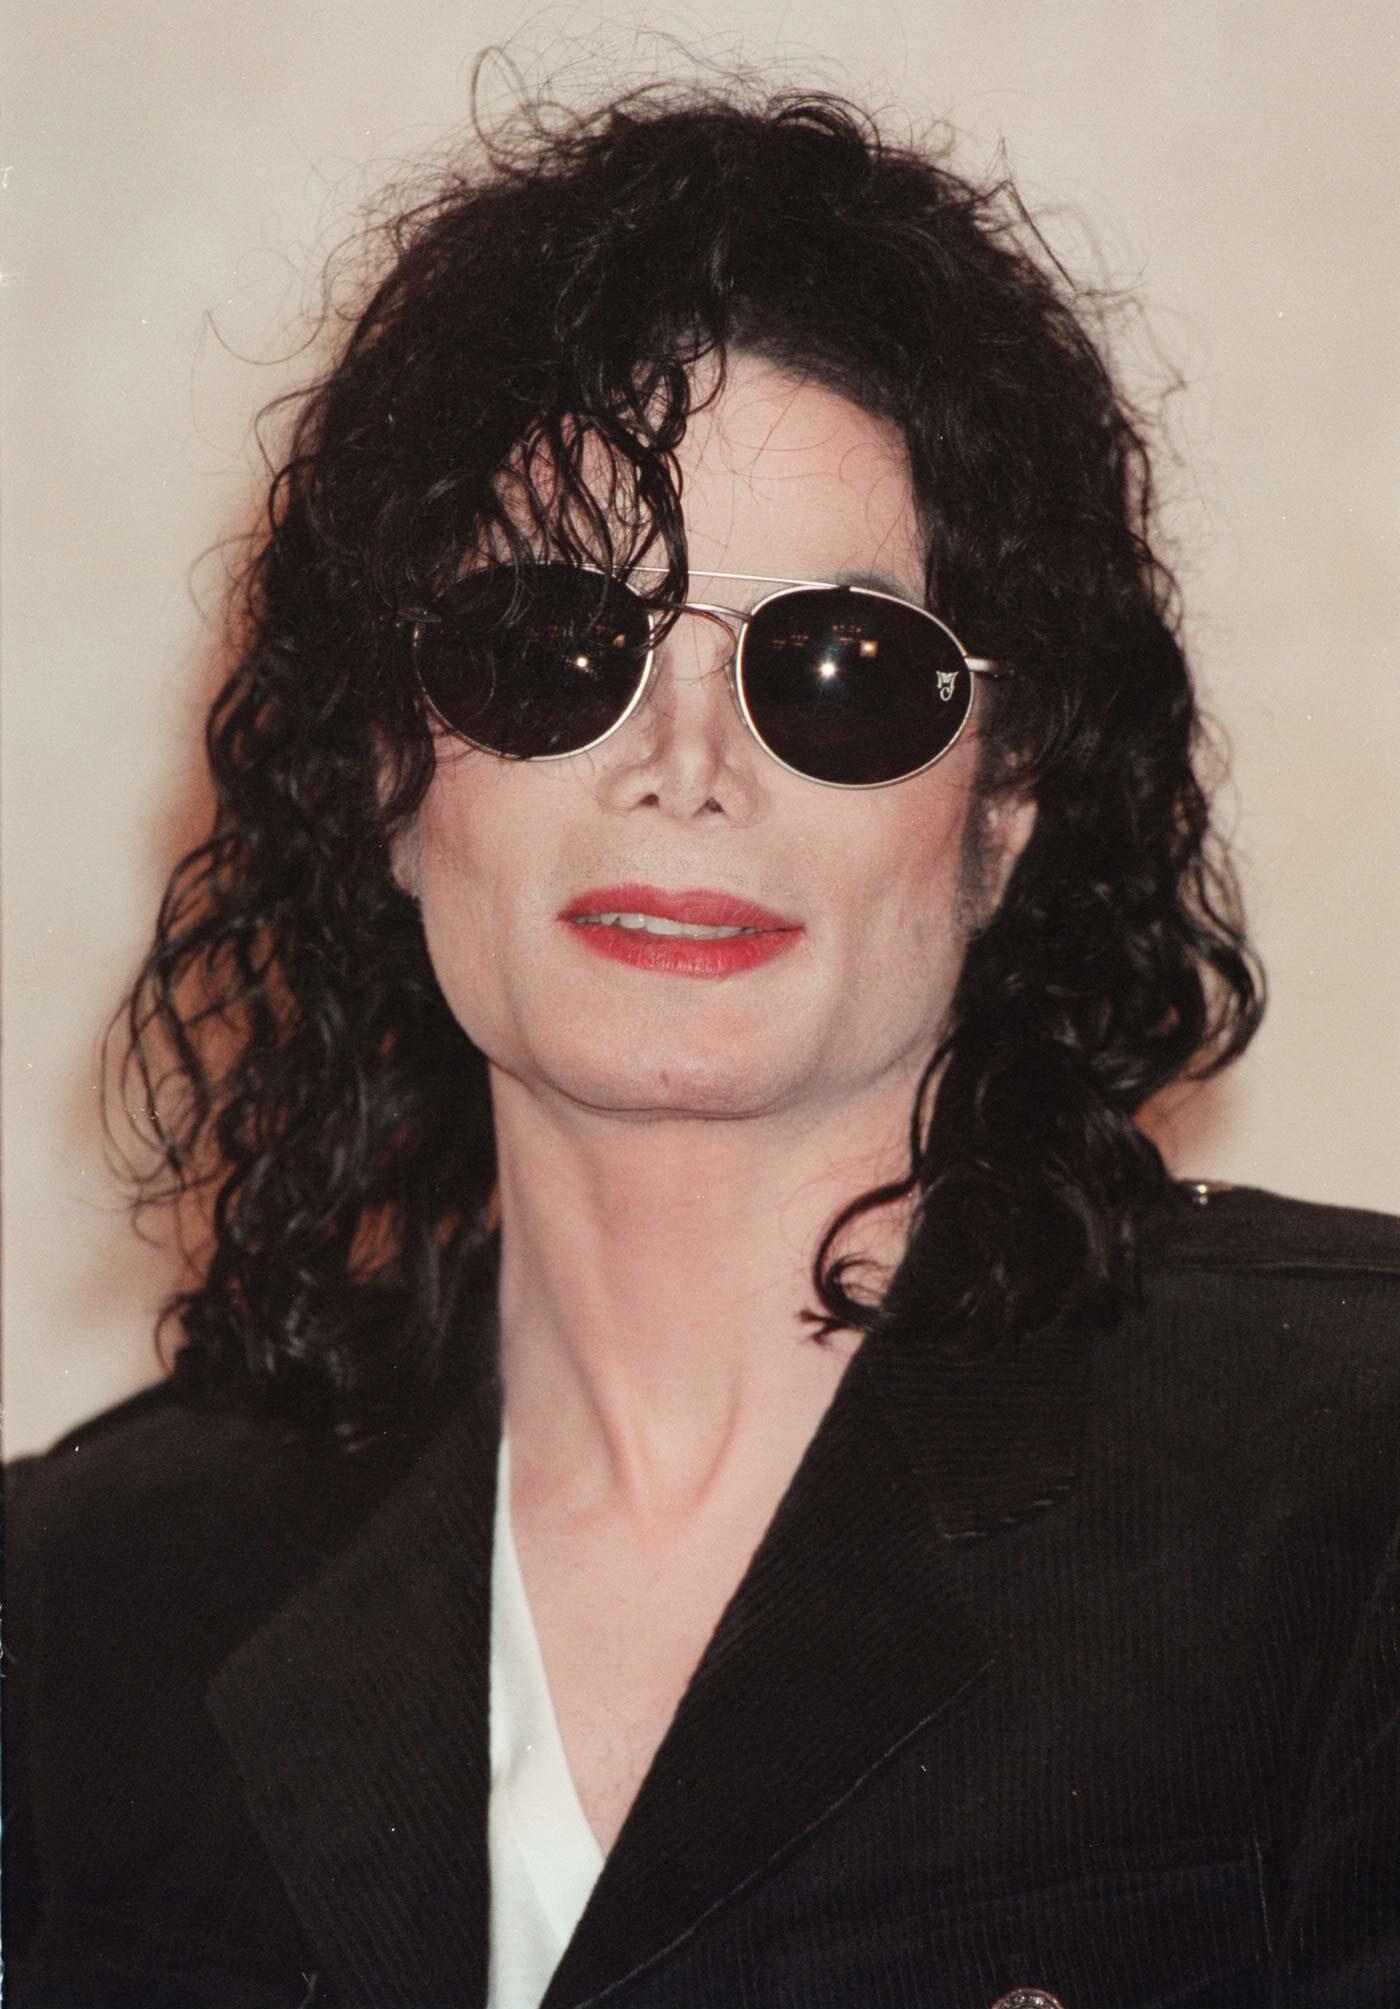 A close up portrait of Michael Jackson wearing dark shades